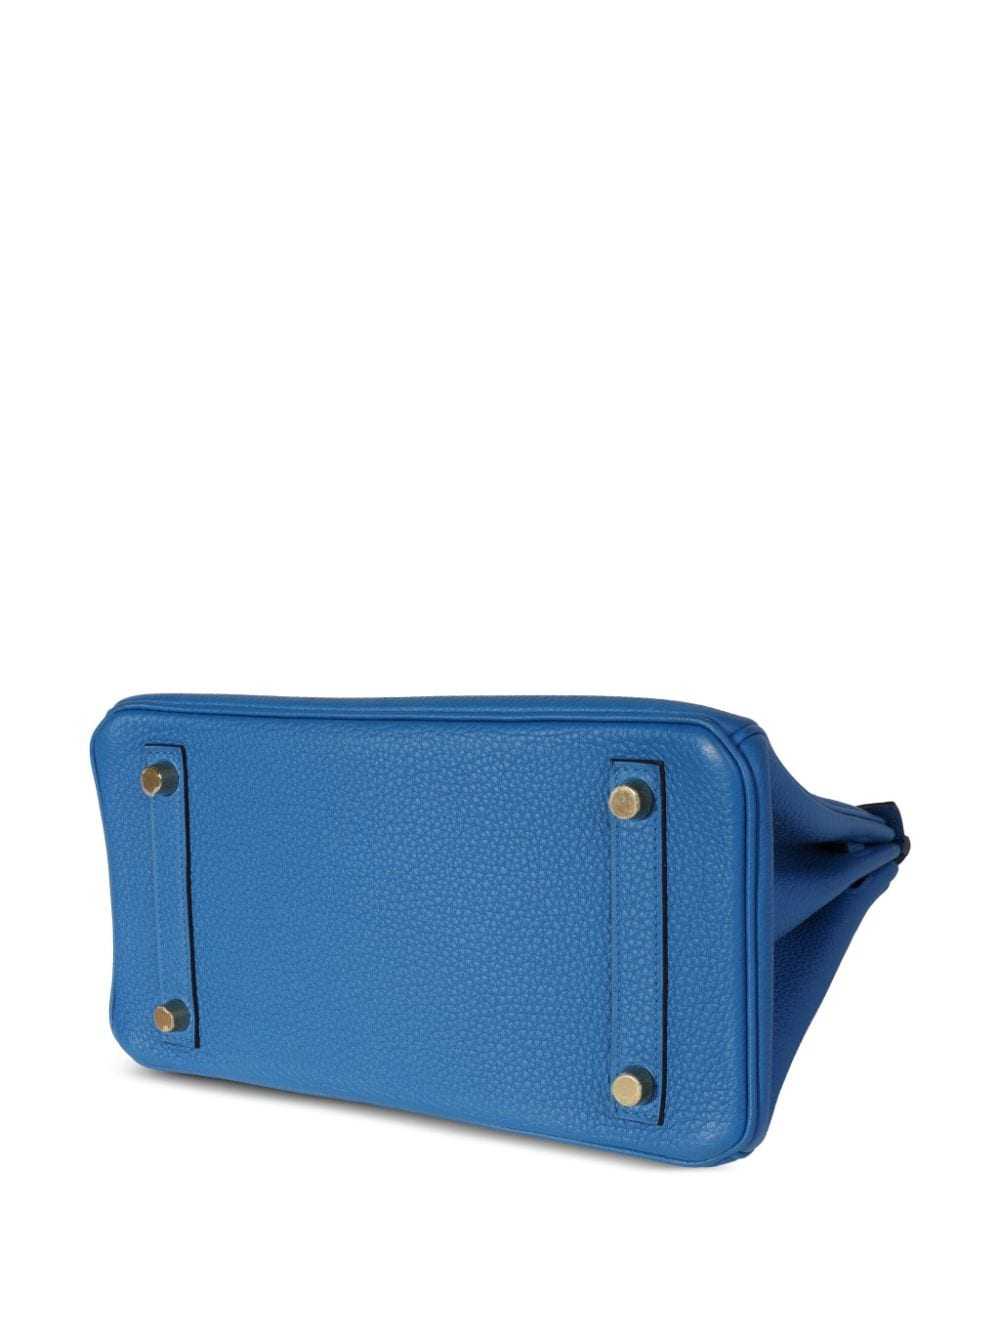 Hermès Pre-Owned 2018 Birkin 25 handbag - Blue - image 5